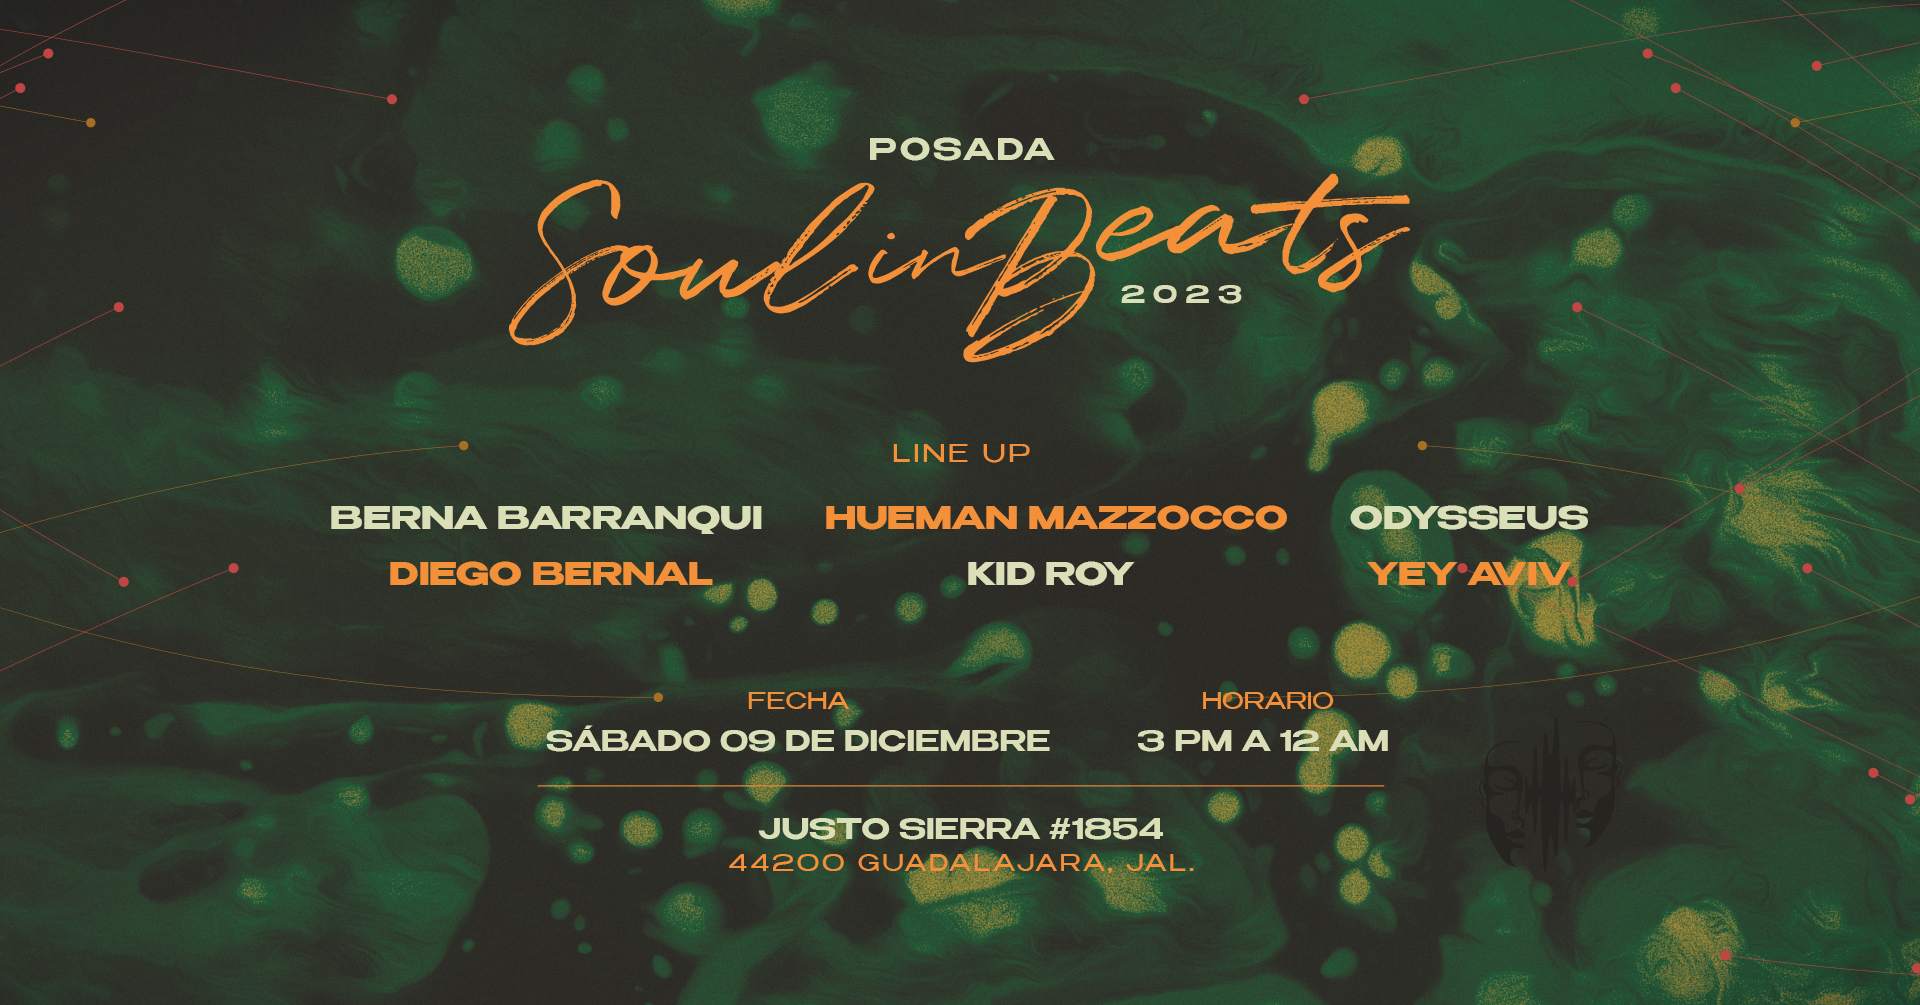 Posada Soul in Beats 2023 - Página frontal